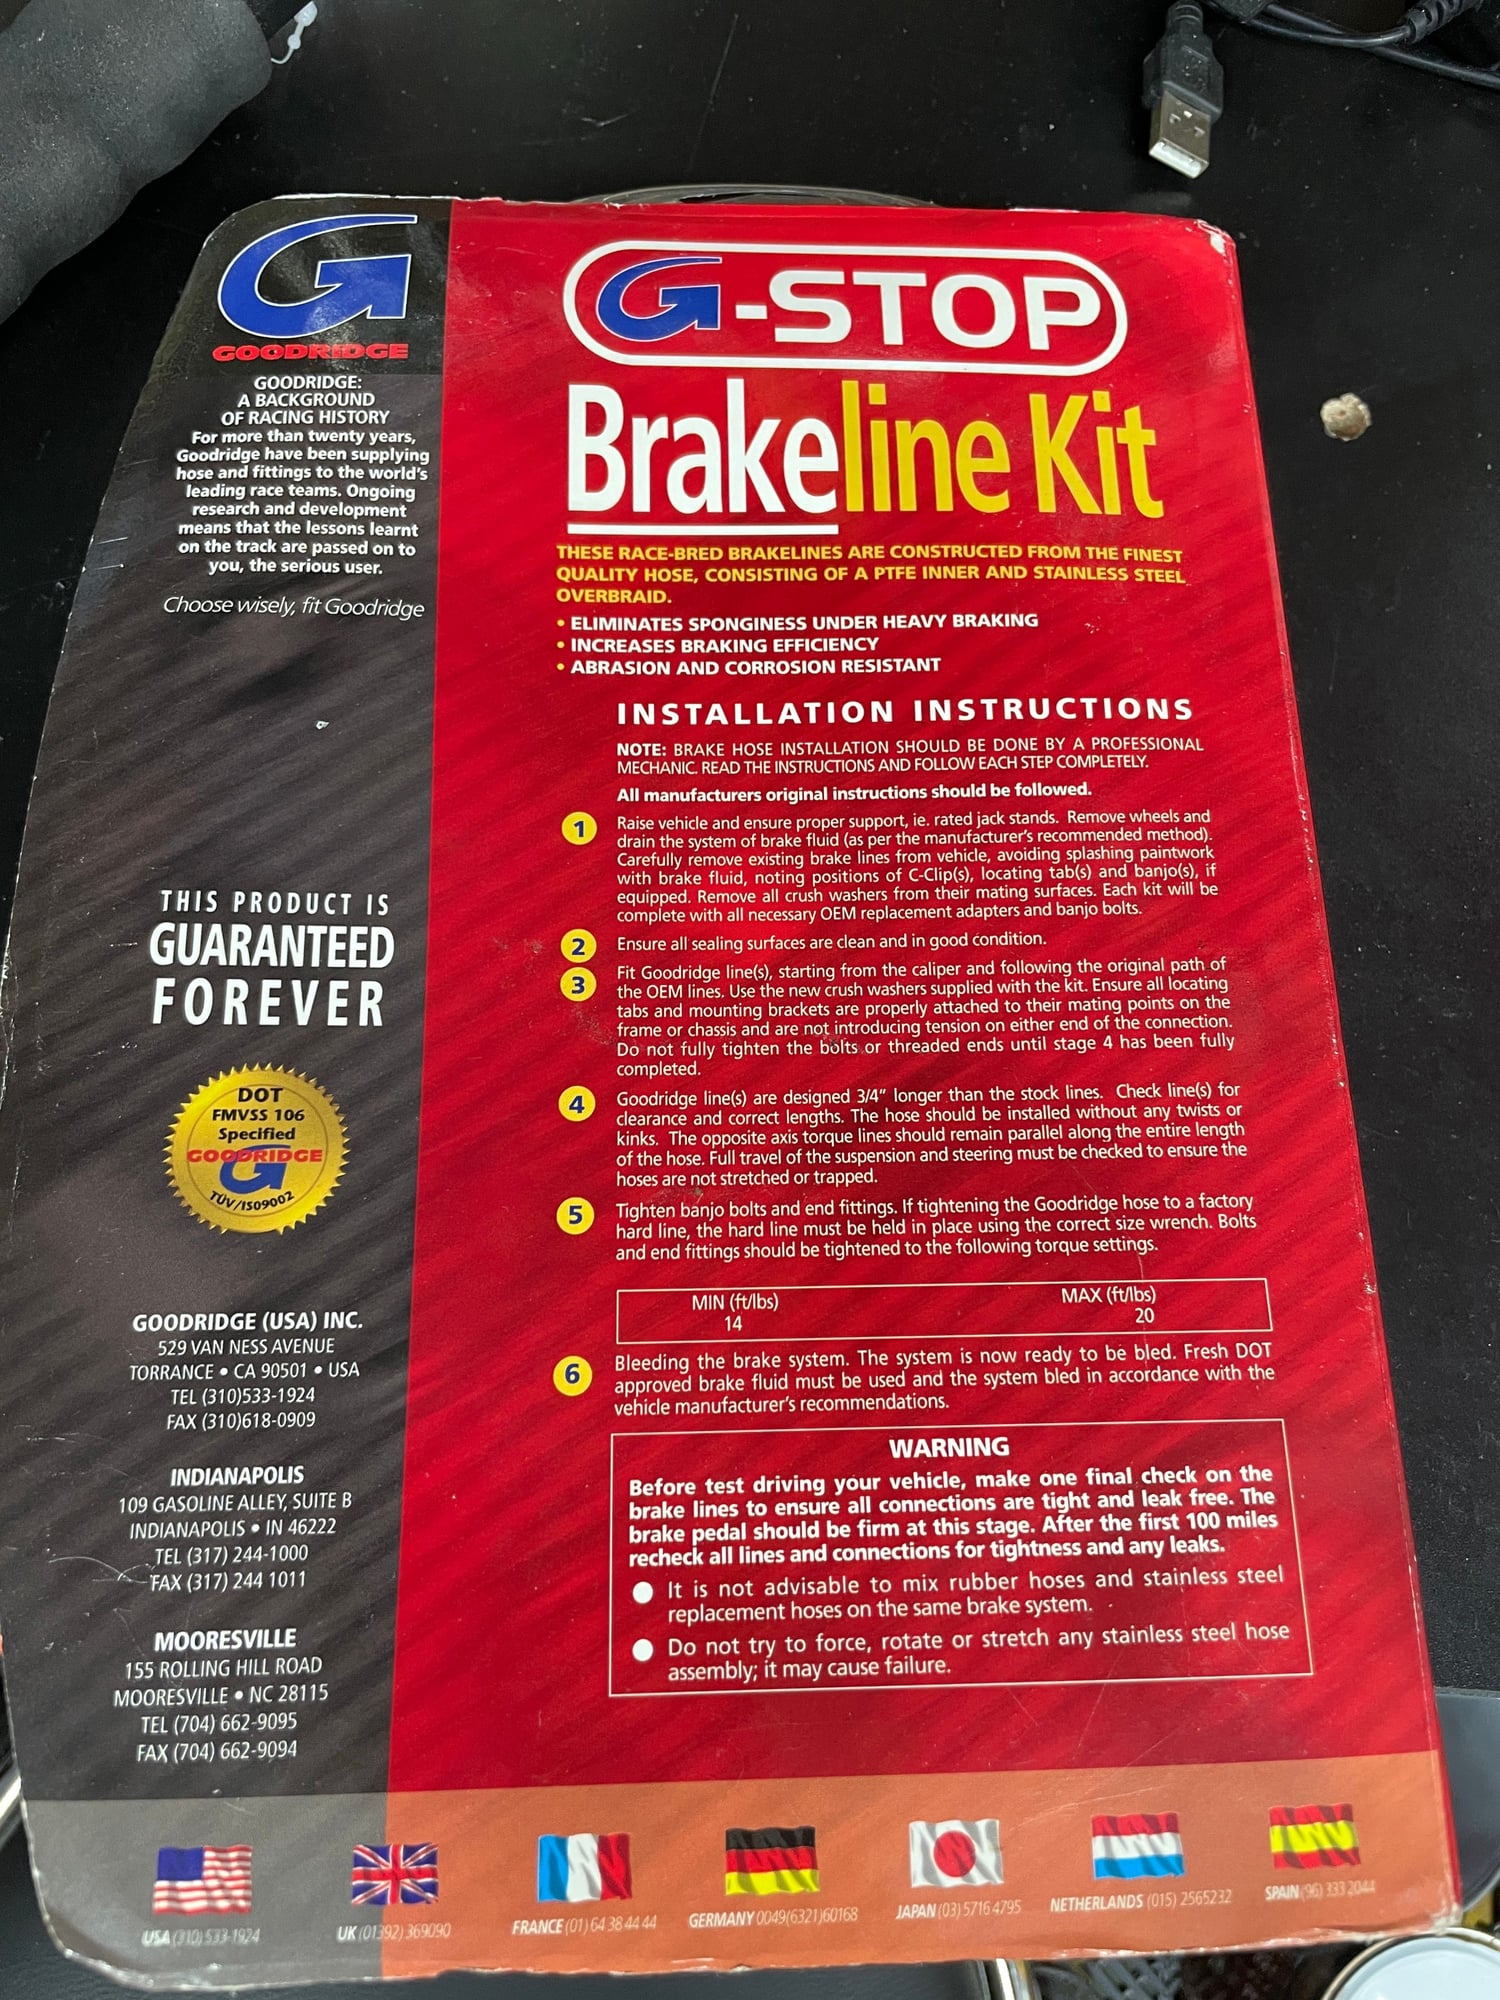 Brakes - Goodridge s/s brake lines - New - 1993 to 1995 Mazda RX-7 - Searingtown, NY 11577, United States